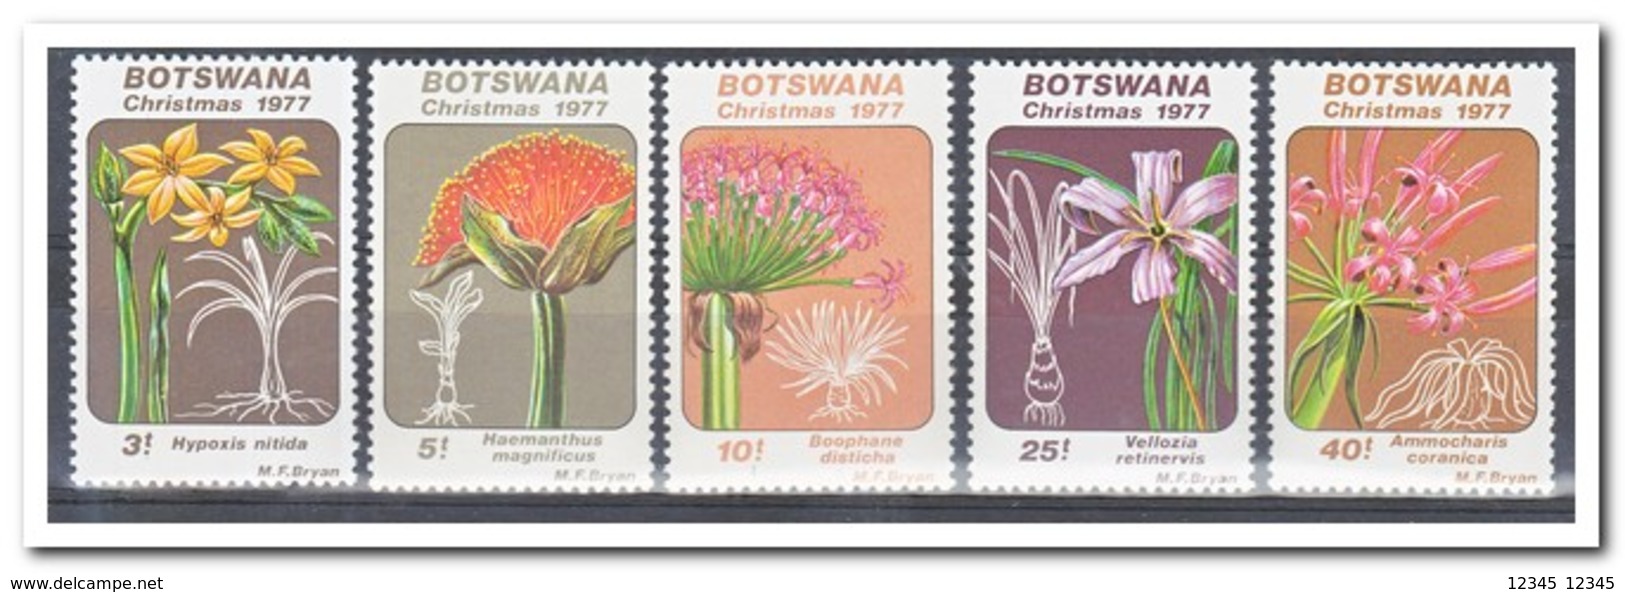 Botswana 1977, Postfris MNH, Flowers, Christmas - Botswana (1966-...)